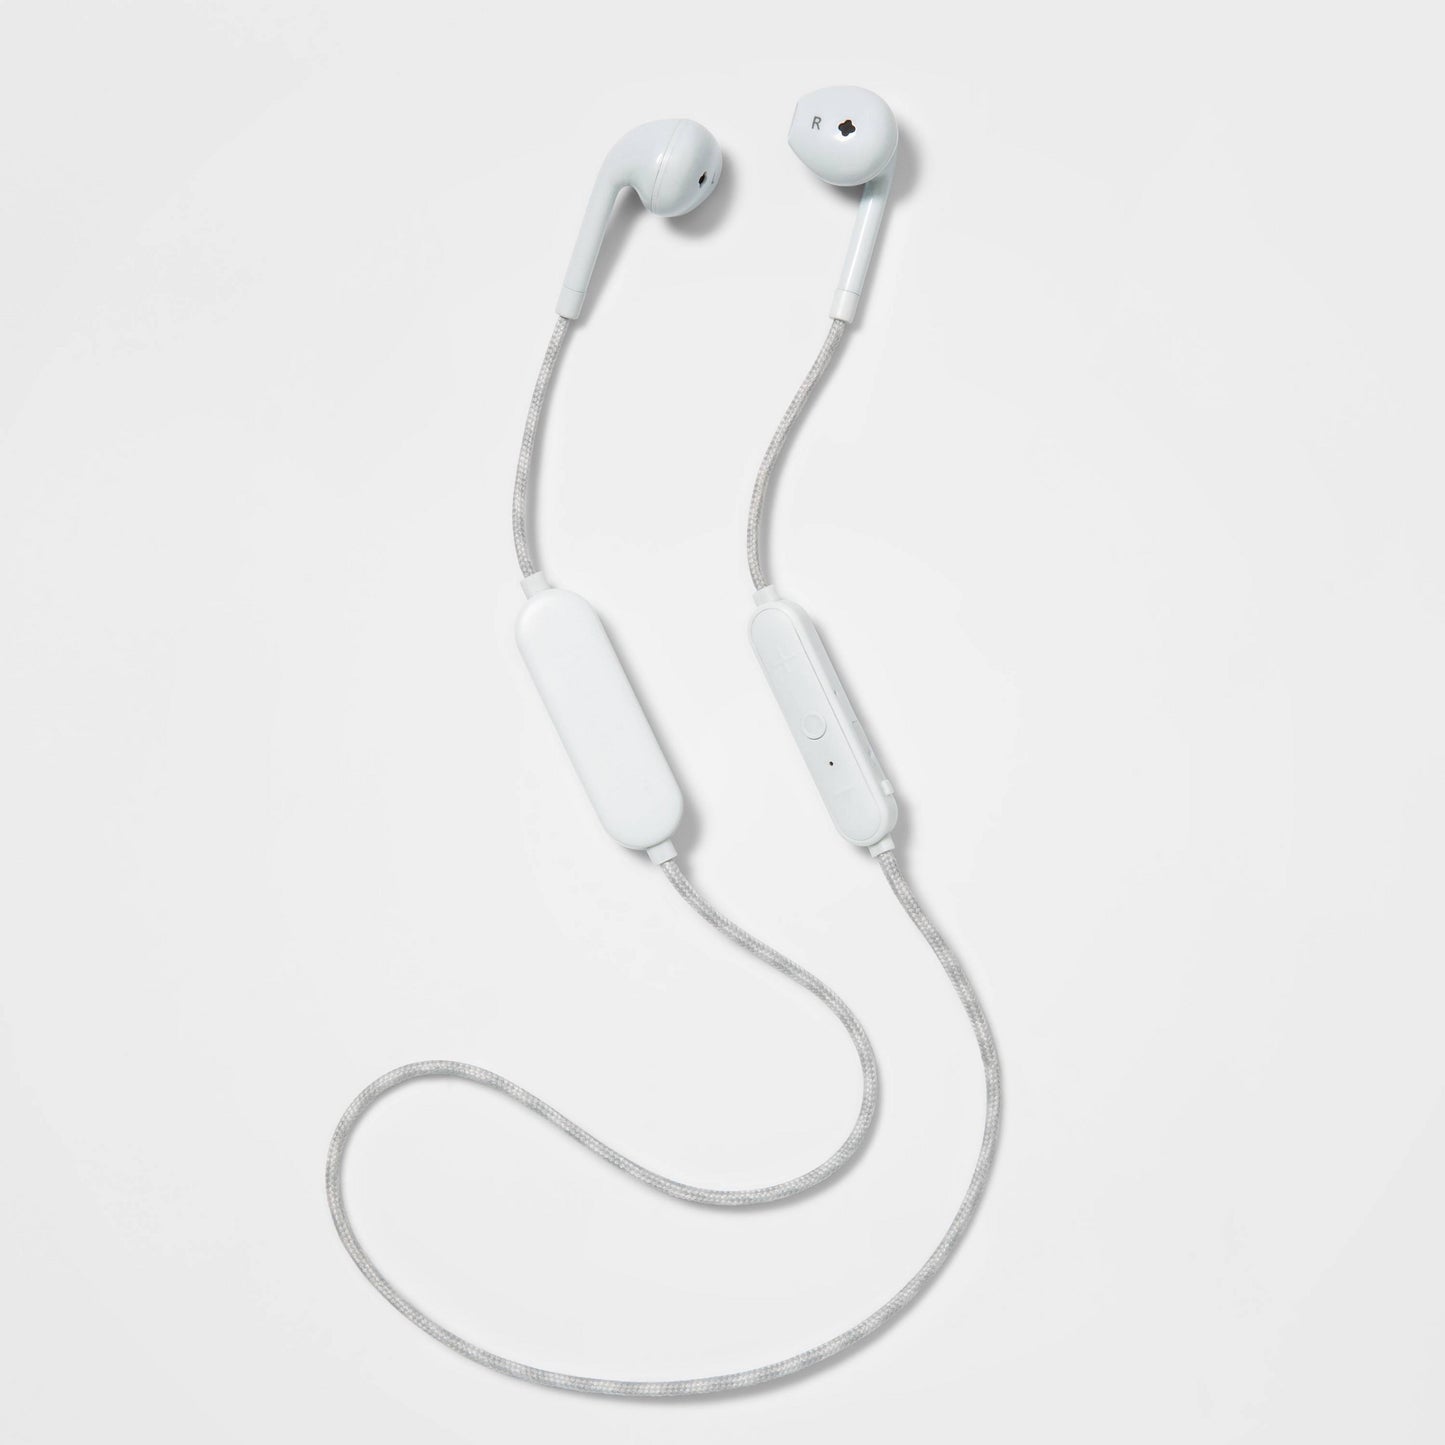 HEYDAY Braided Bluetooth Headphones (Black and White)